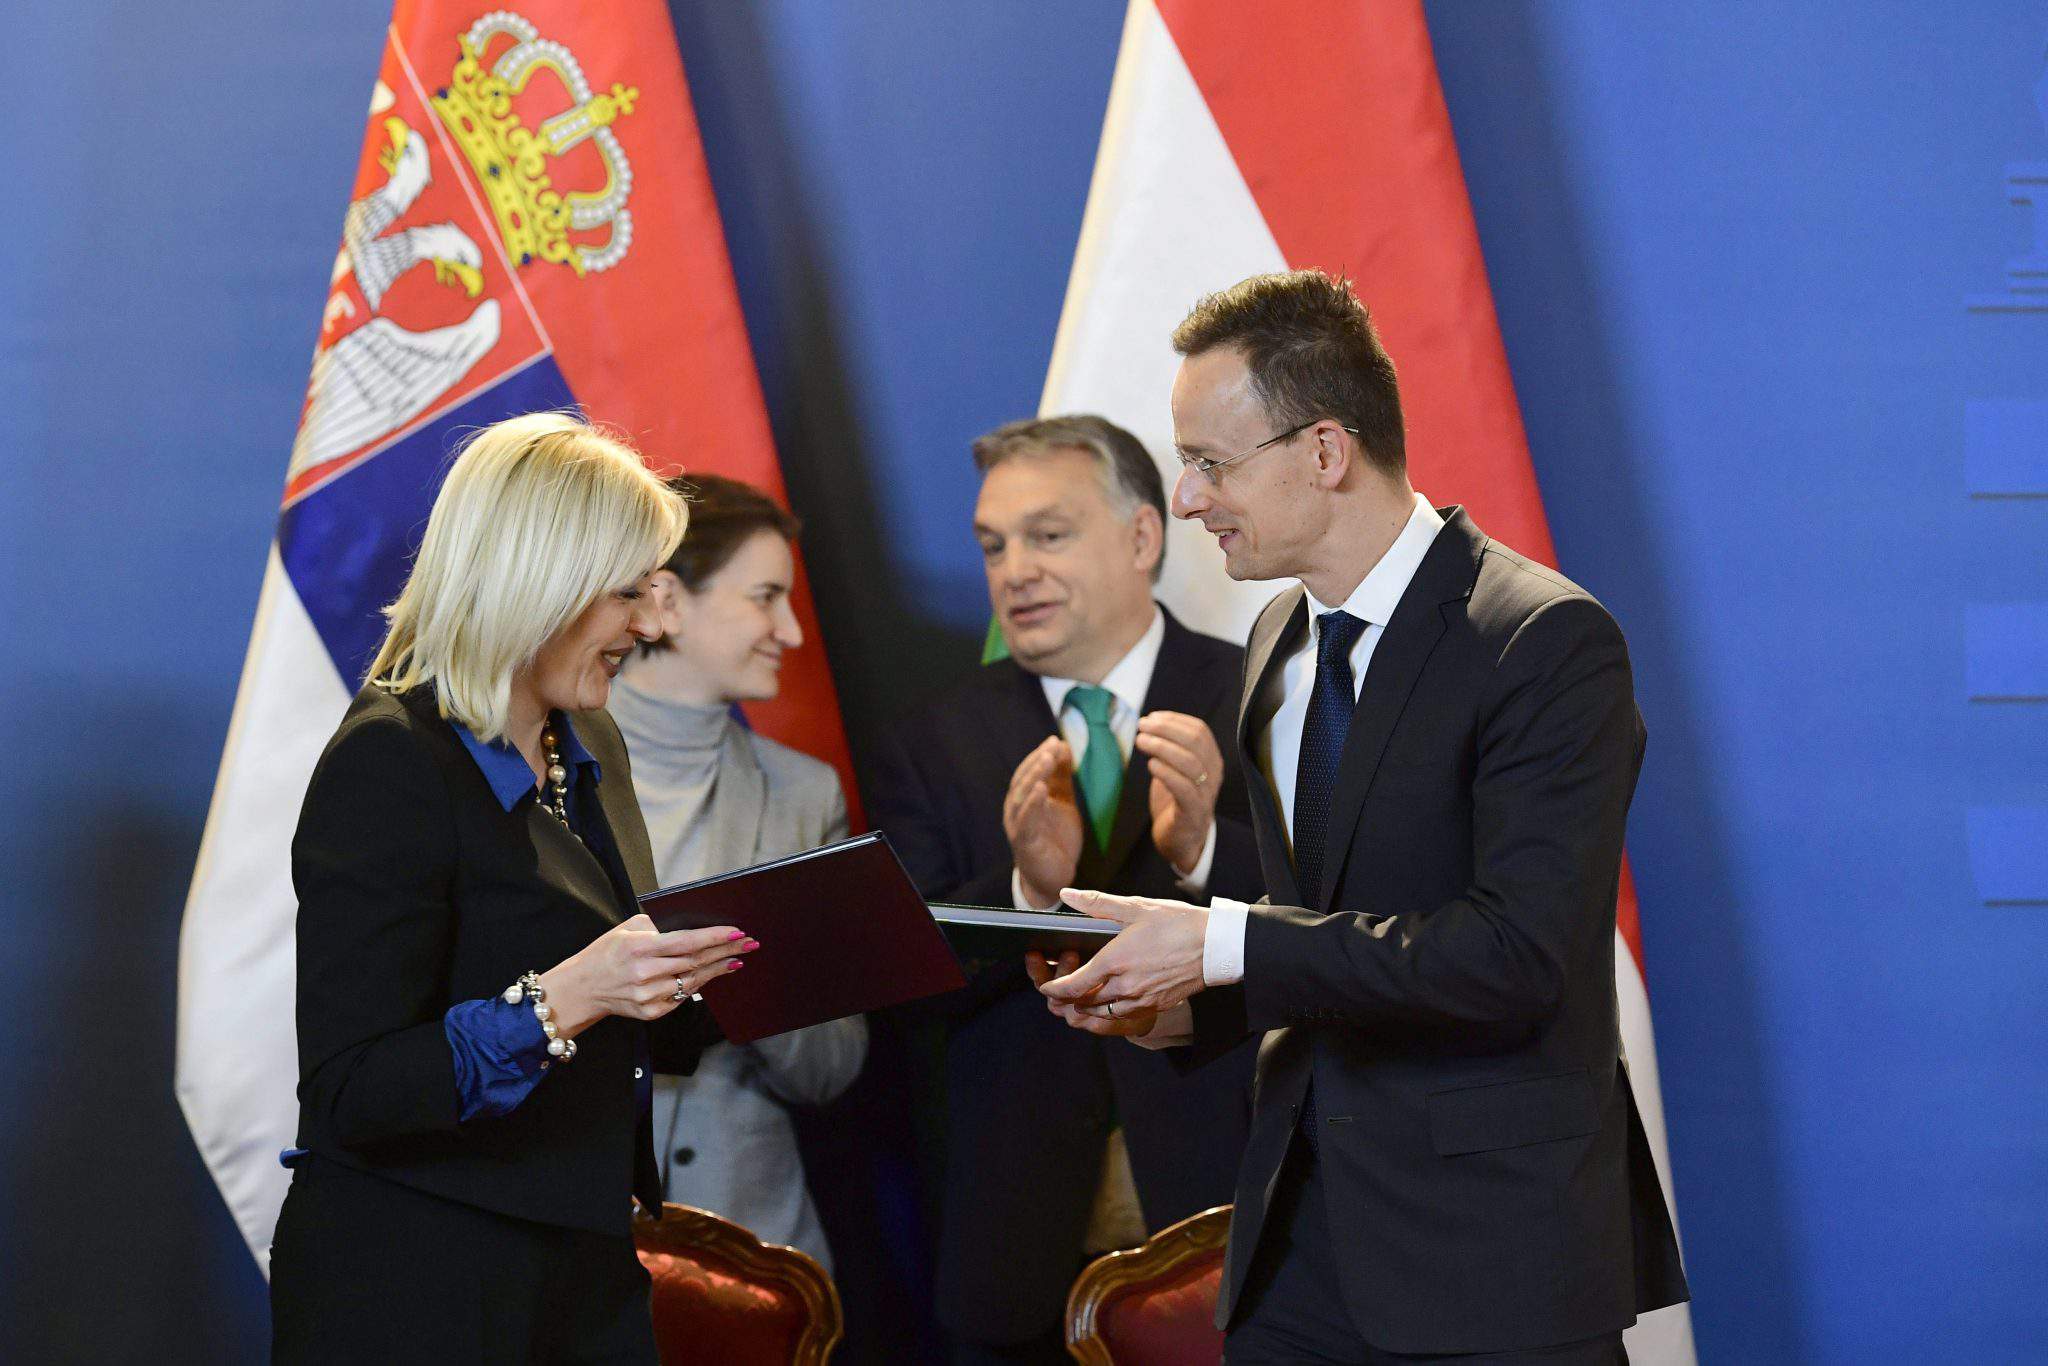 Serbia Hungary summit agreement